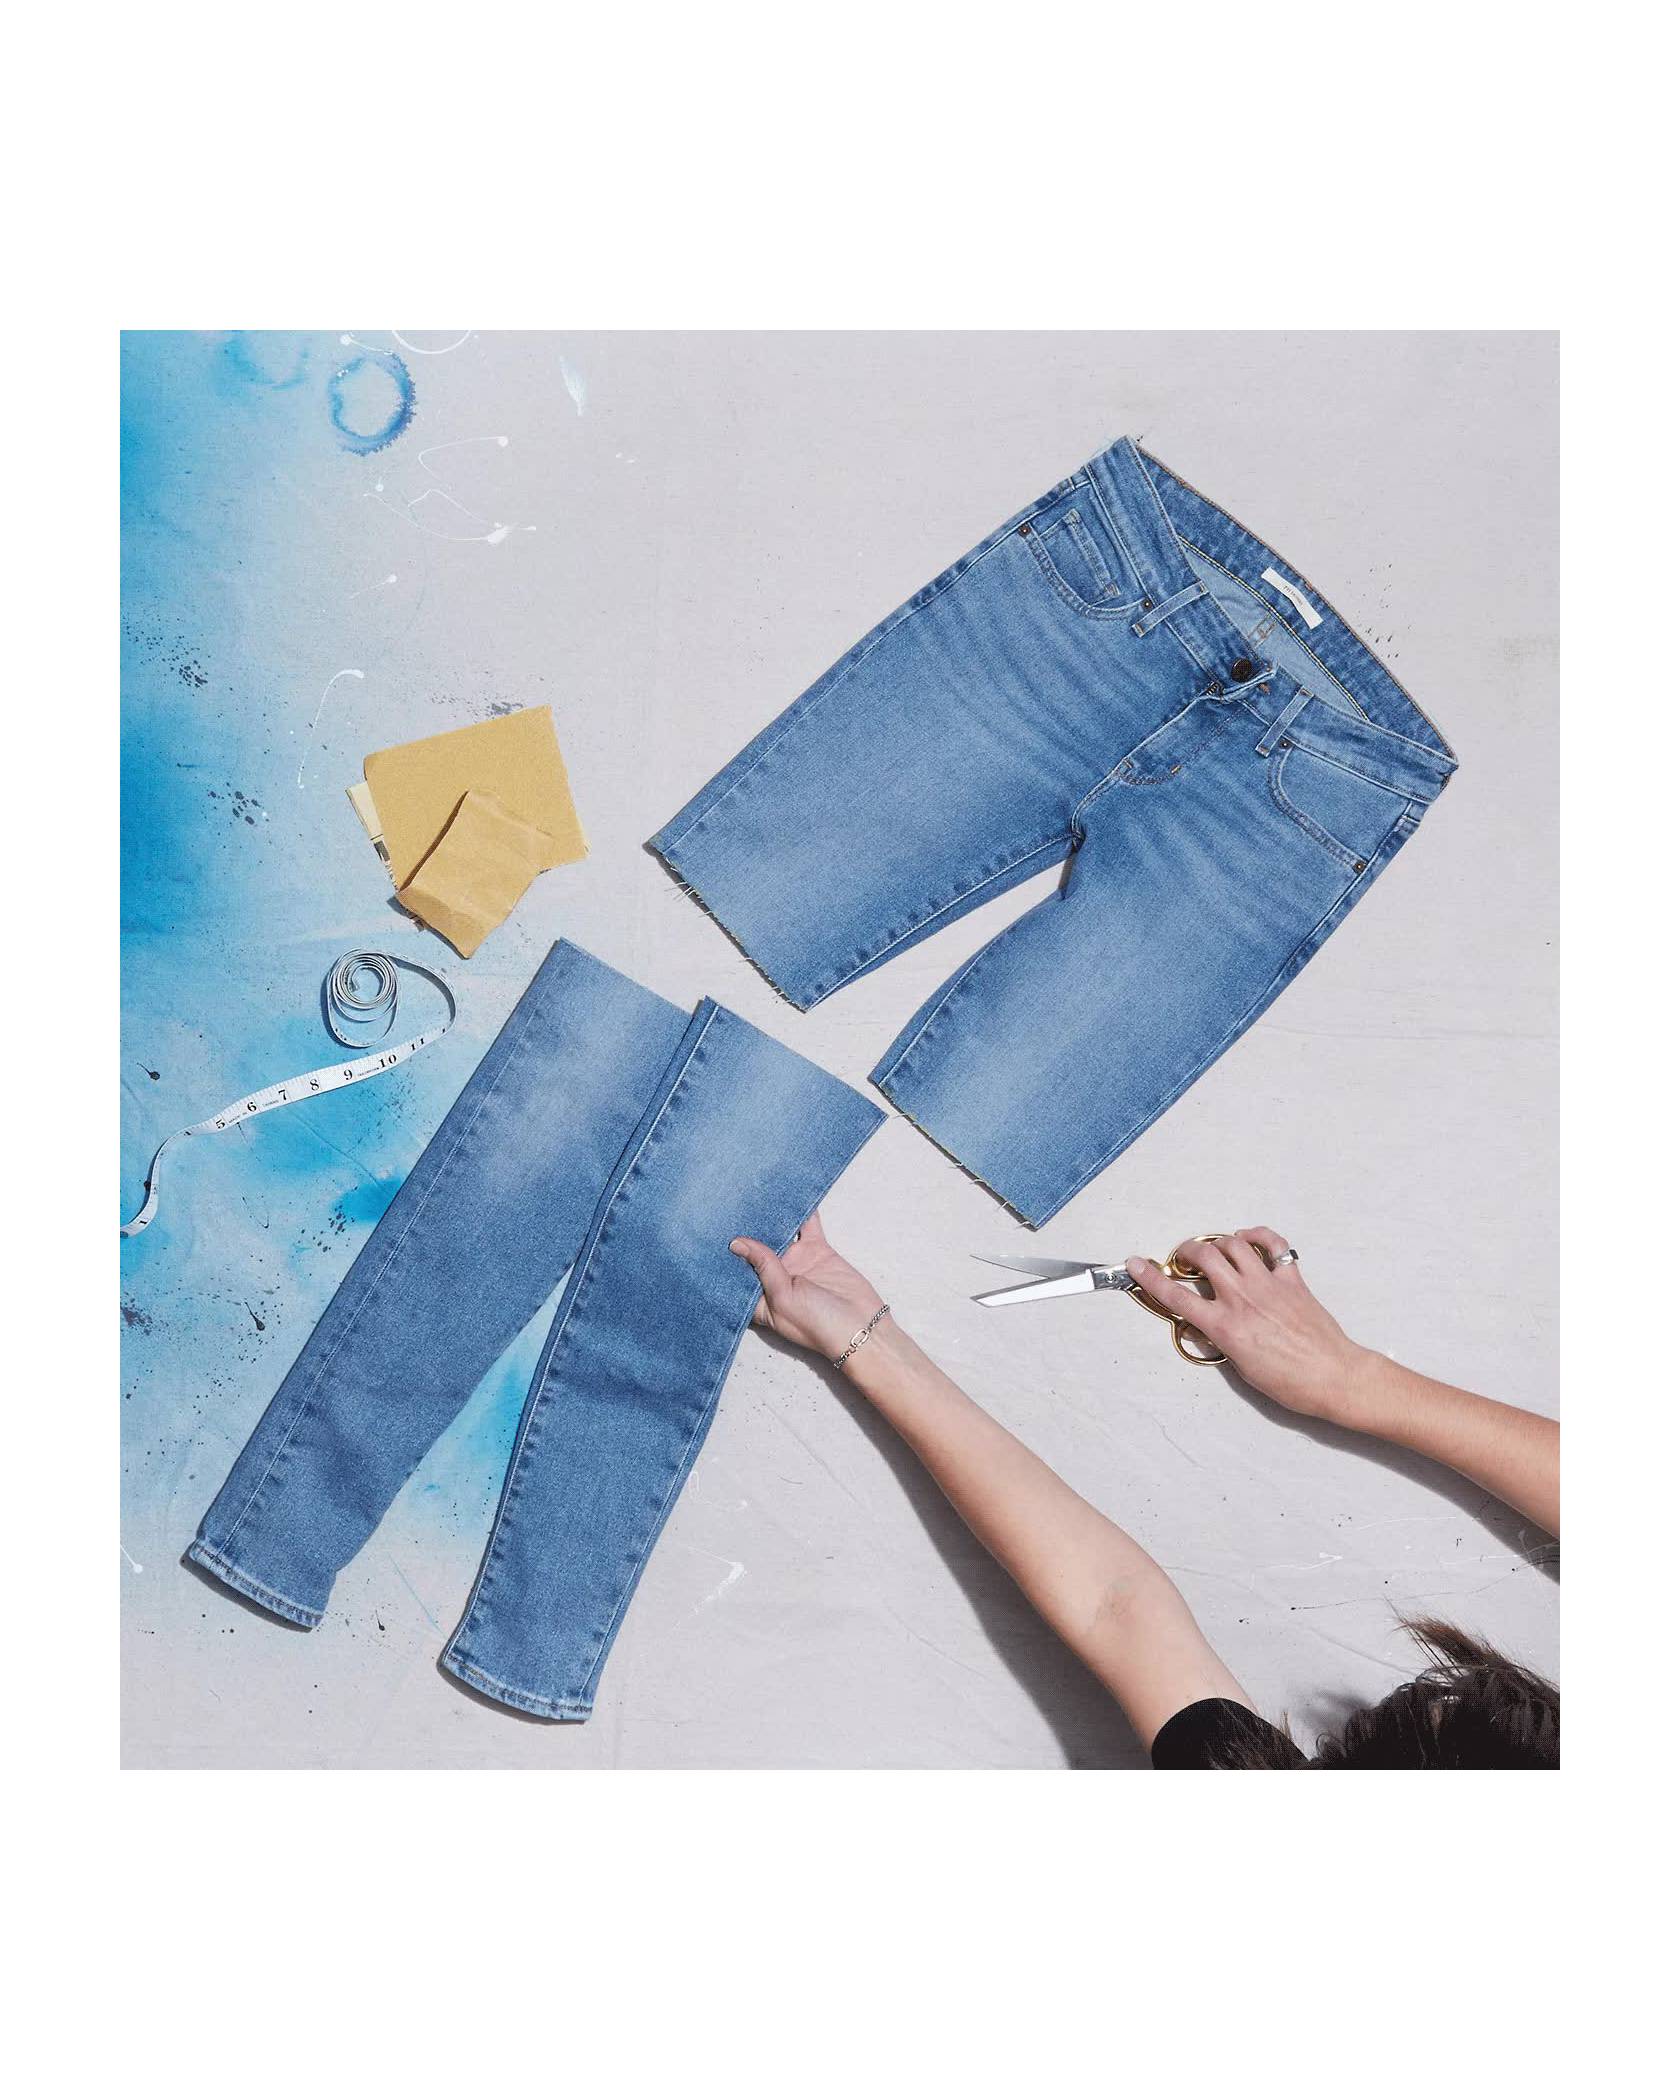 DIY Shorts - Make Perfect Cut Off Jean Shorts | Off The Cuff